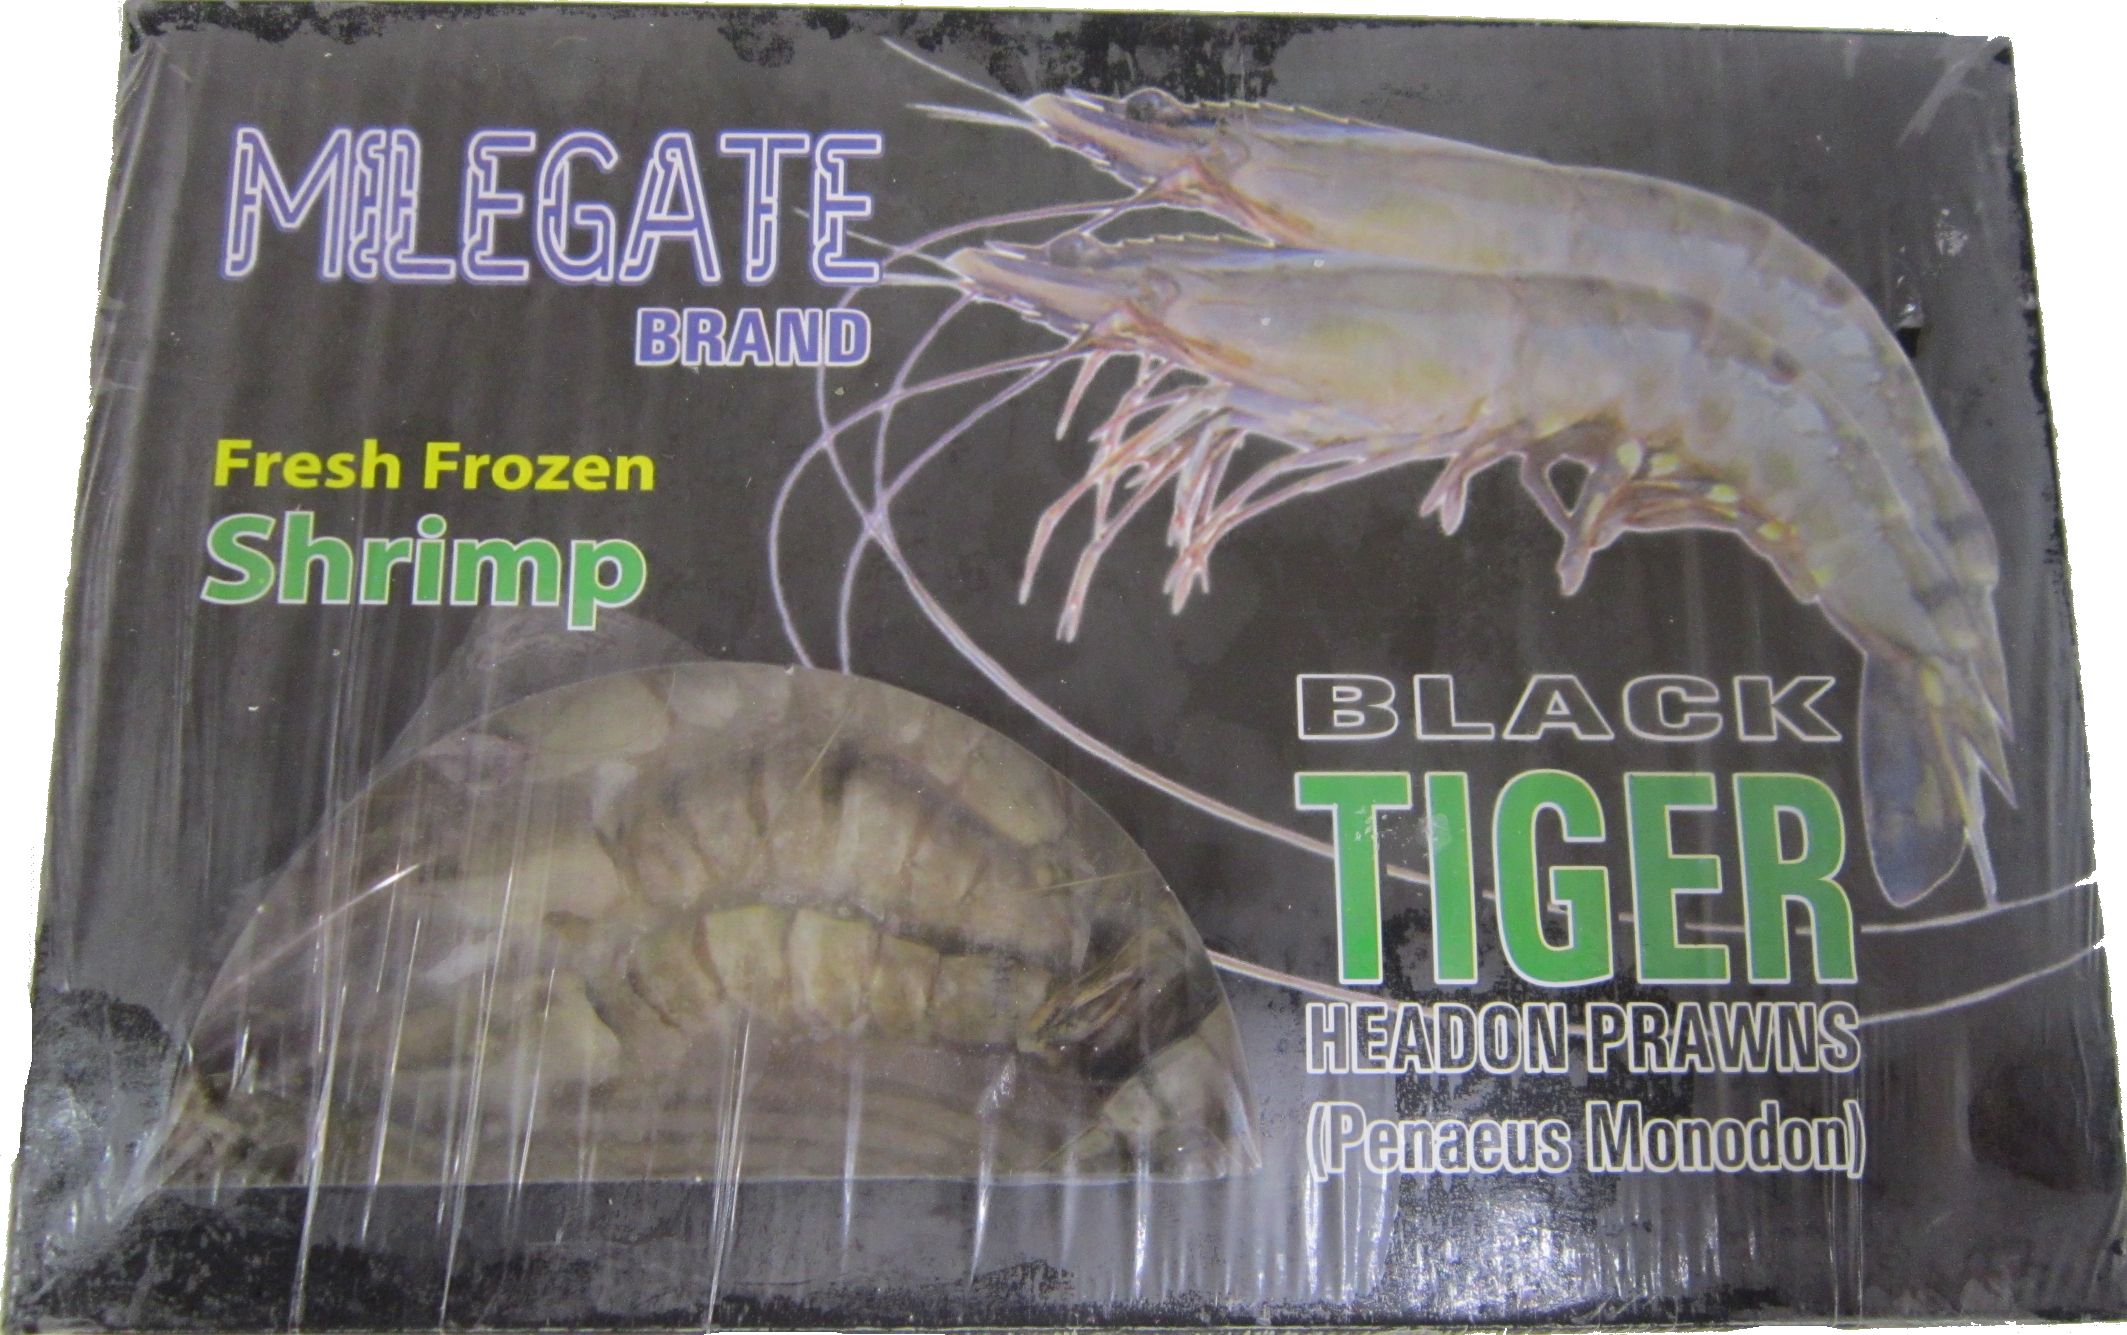 Milegate Black Tiger Headon Prawns Image